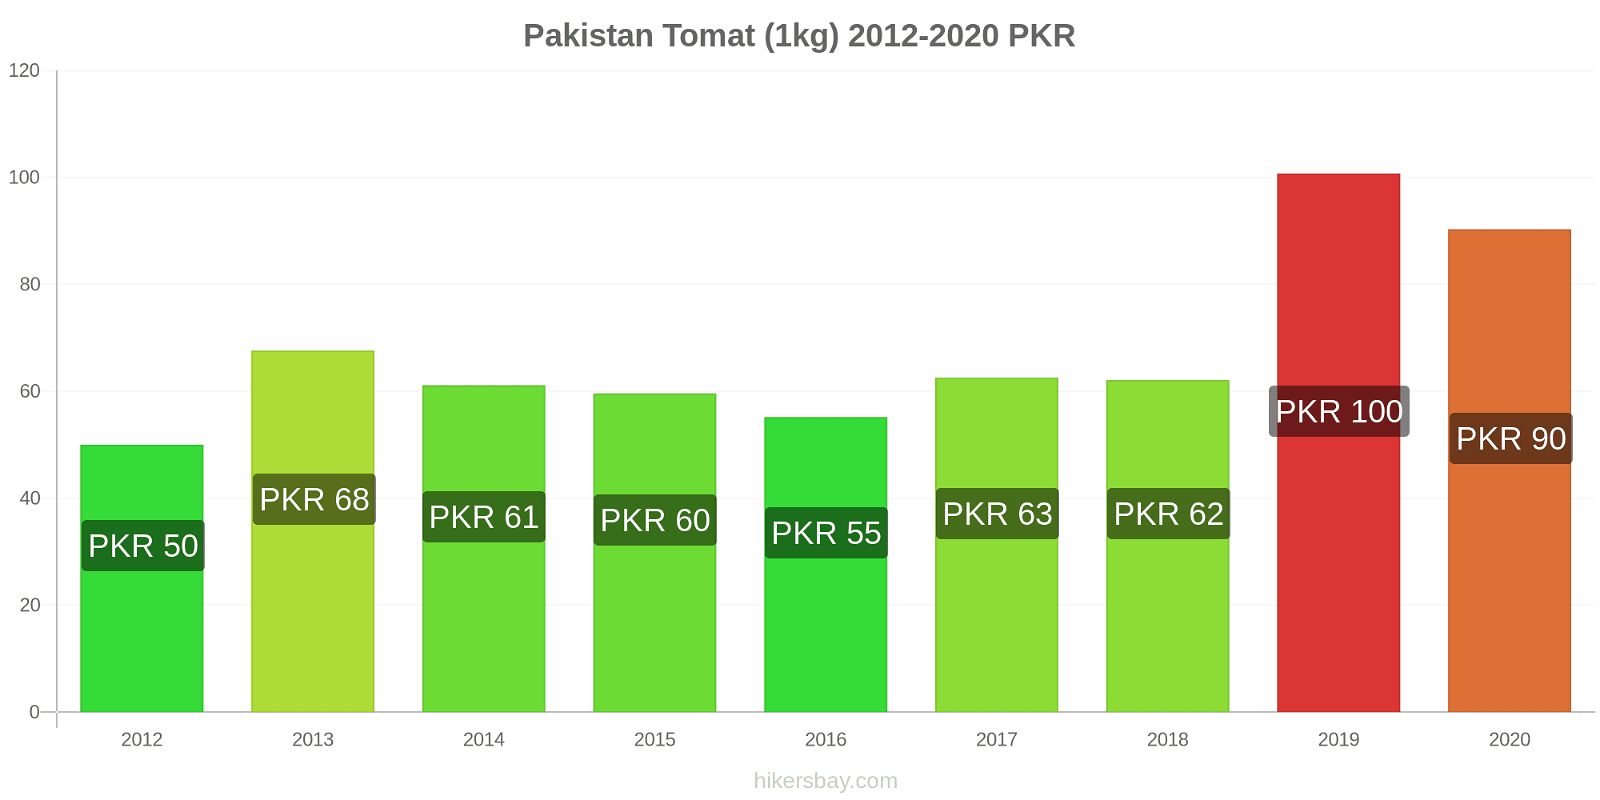 Pakistan prisendringer Tomat (1kg) hikersbay.com